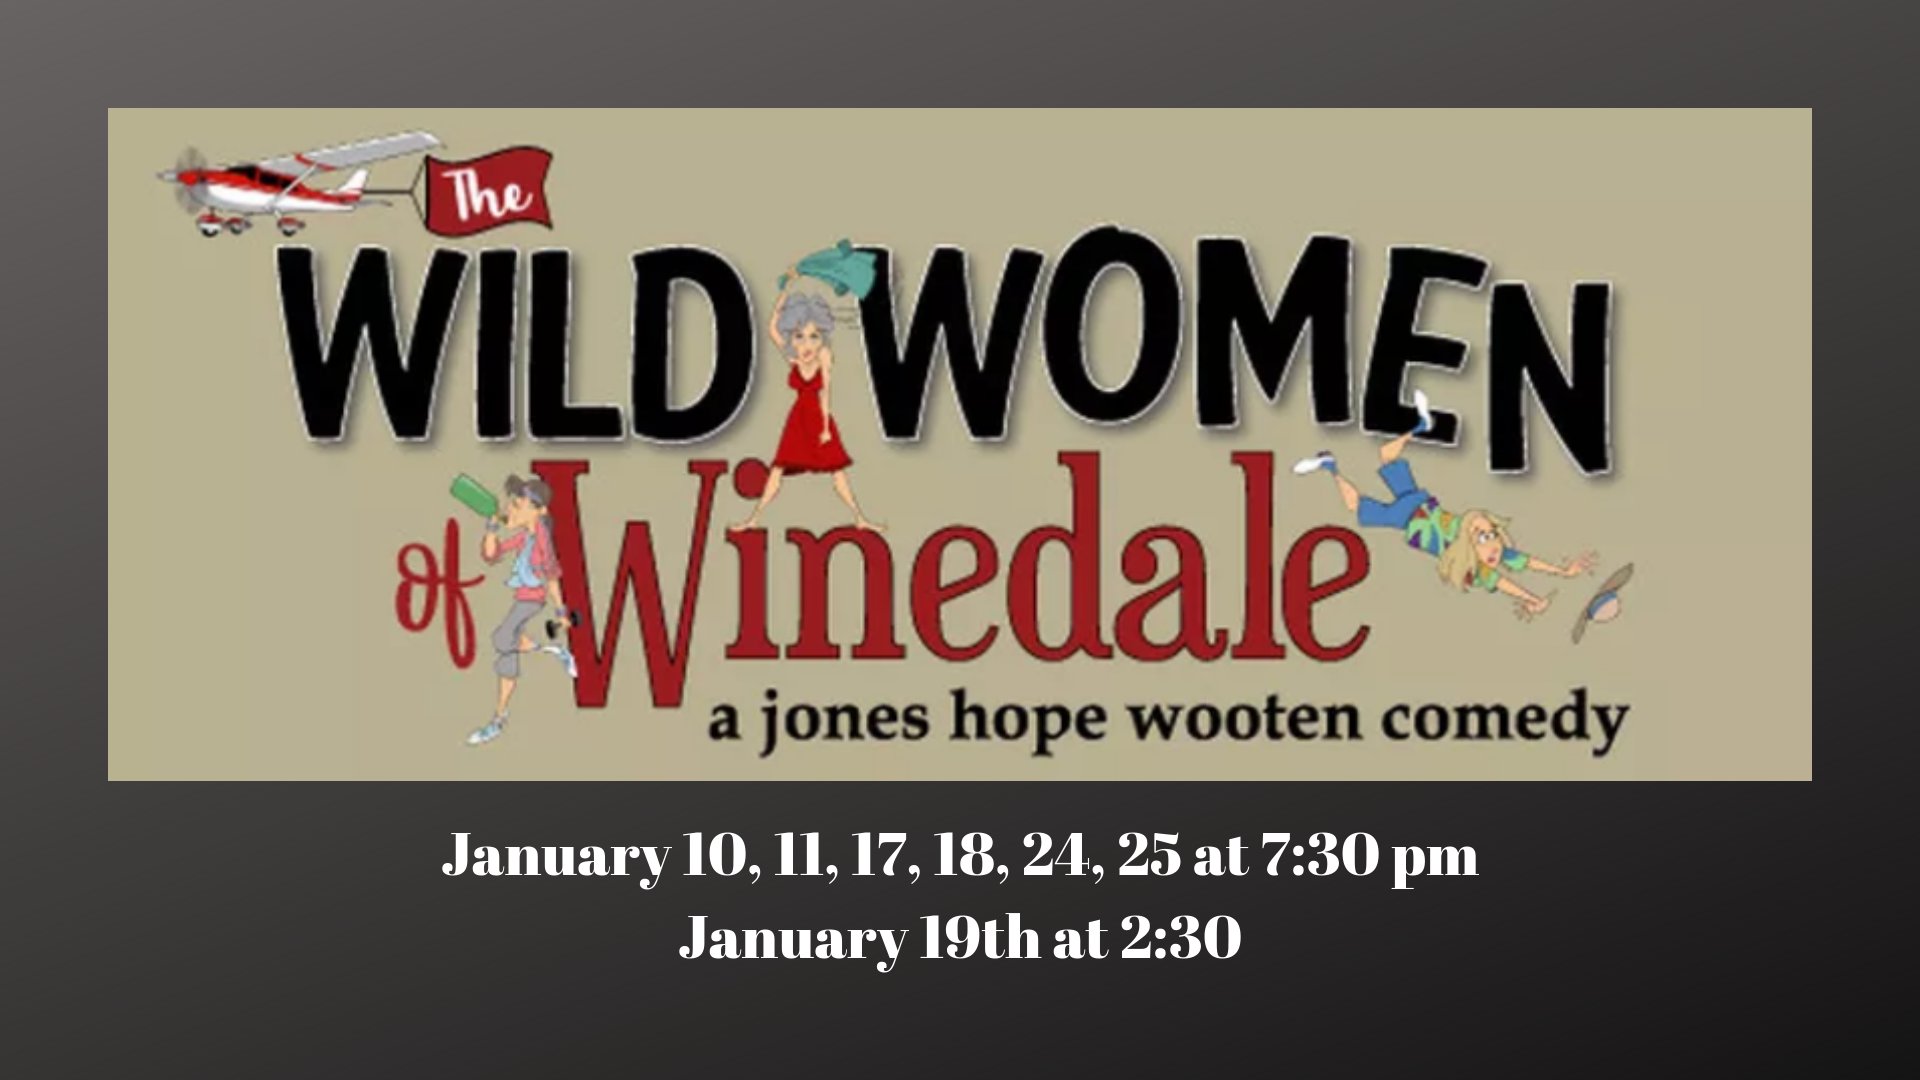 The Wild Women of Winedale by Bastrop Opera House